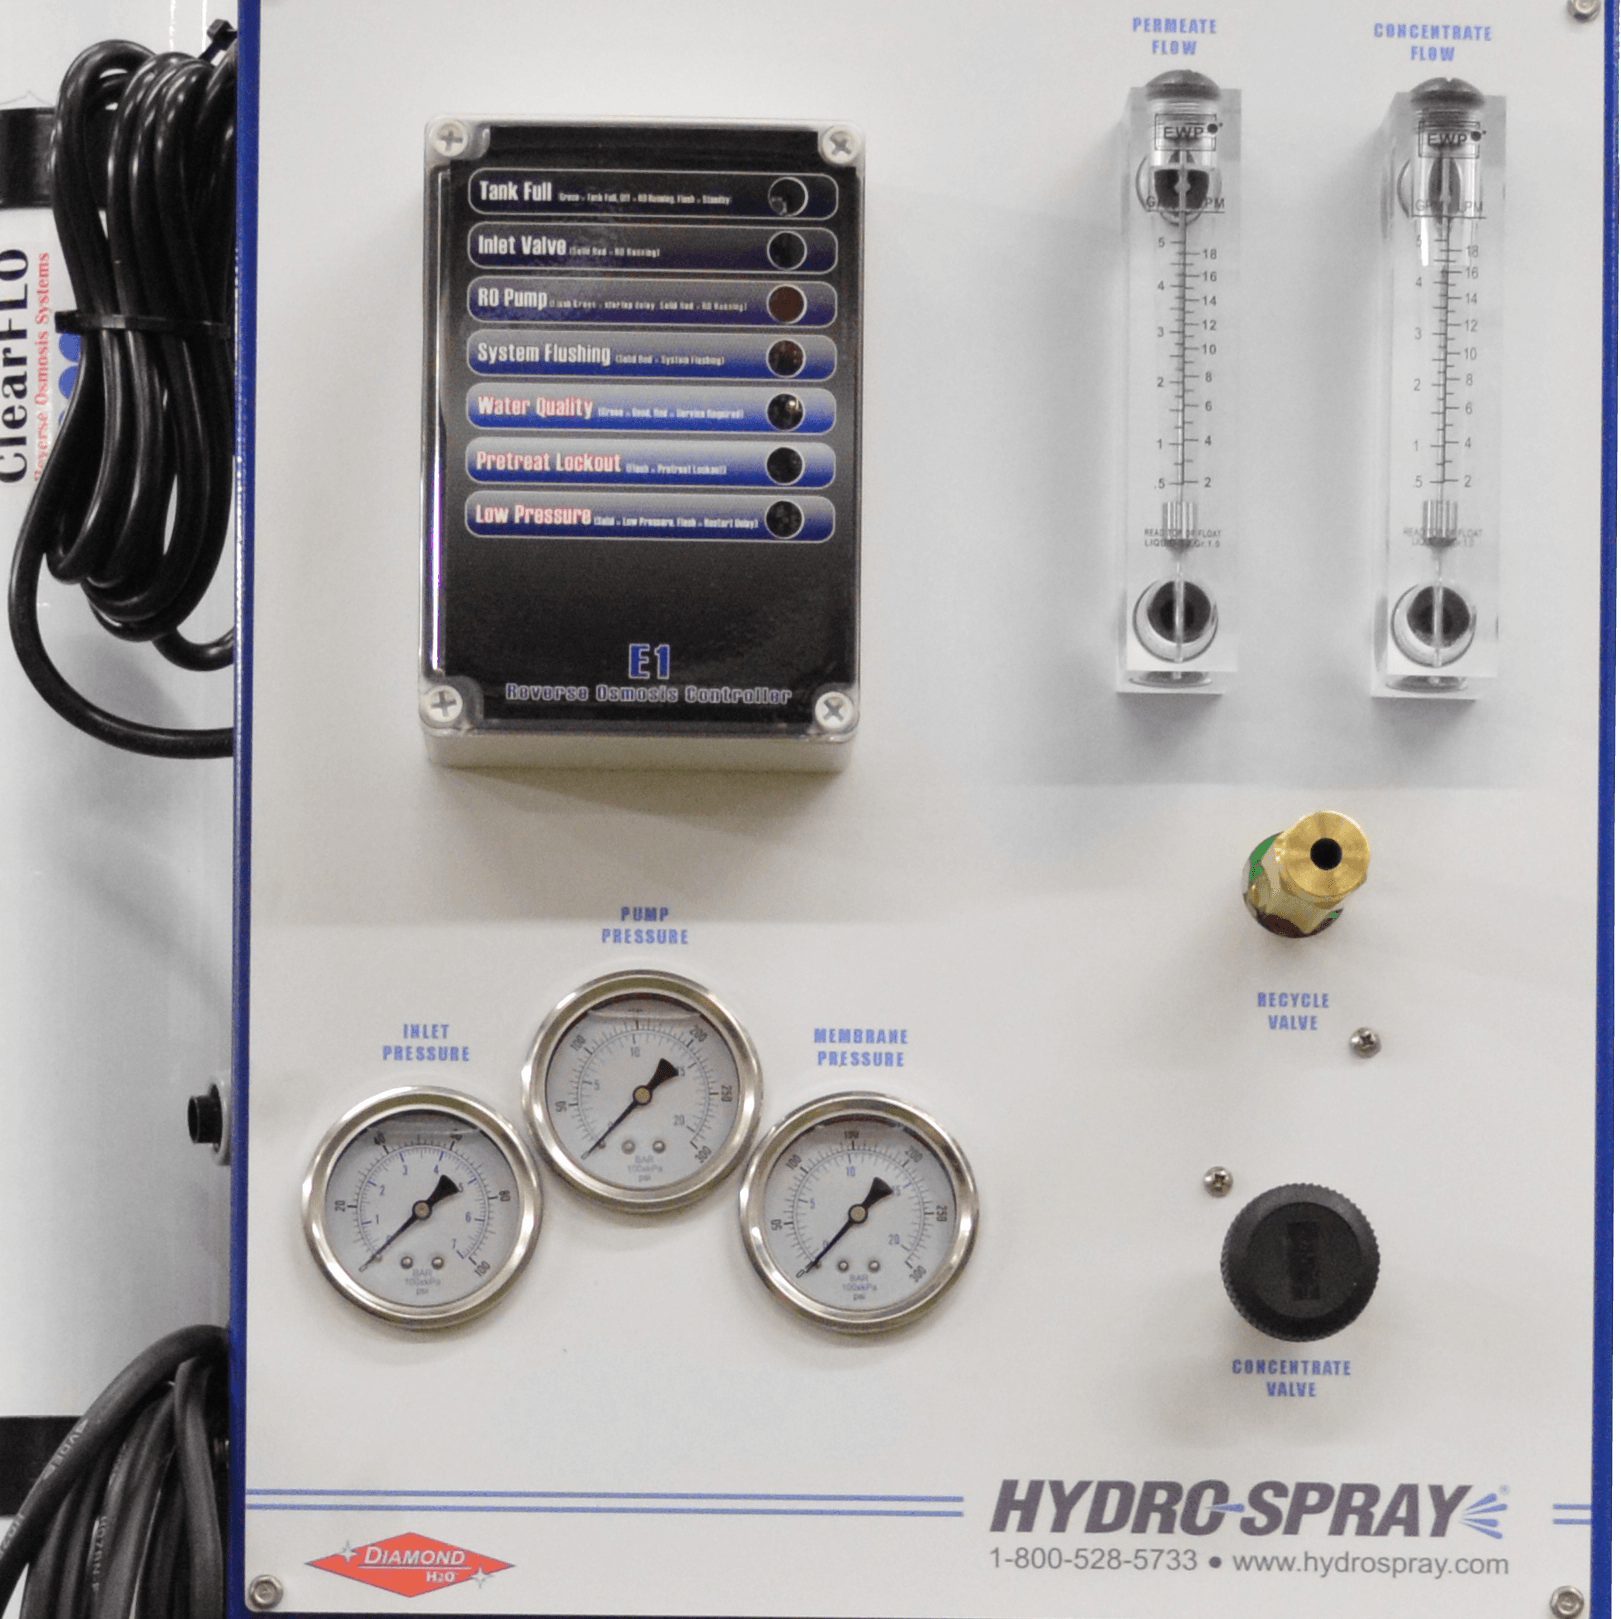 Hydro-Spray Water Treatment equipment